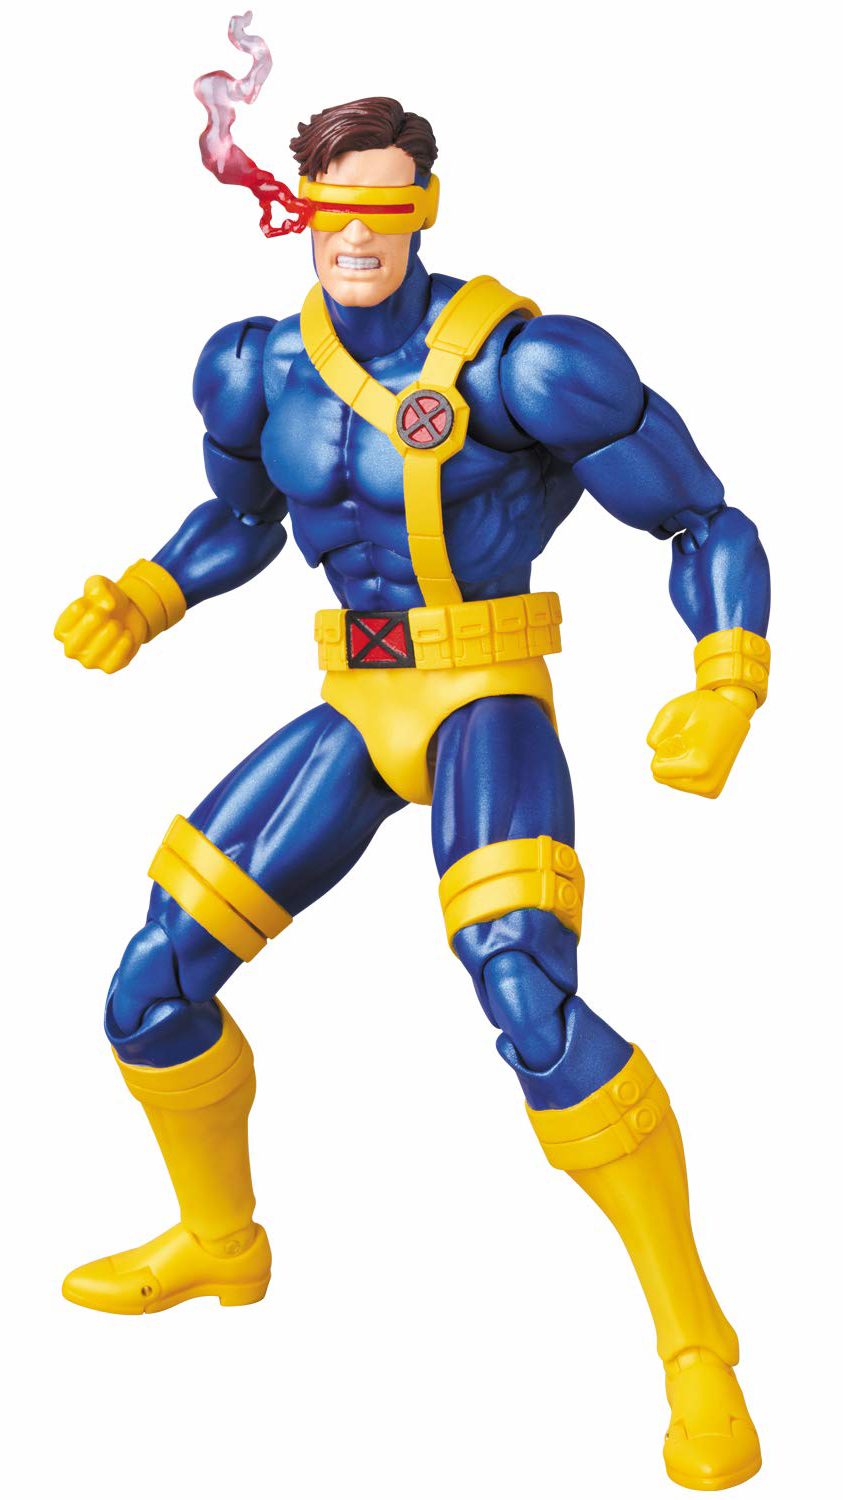 Cyclops MAFEX Figure Official Photos & Pre-Order! (Jim Lee X-Men) - Marvel  Toy News